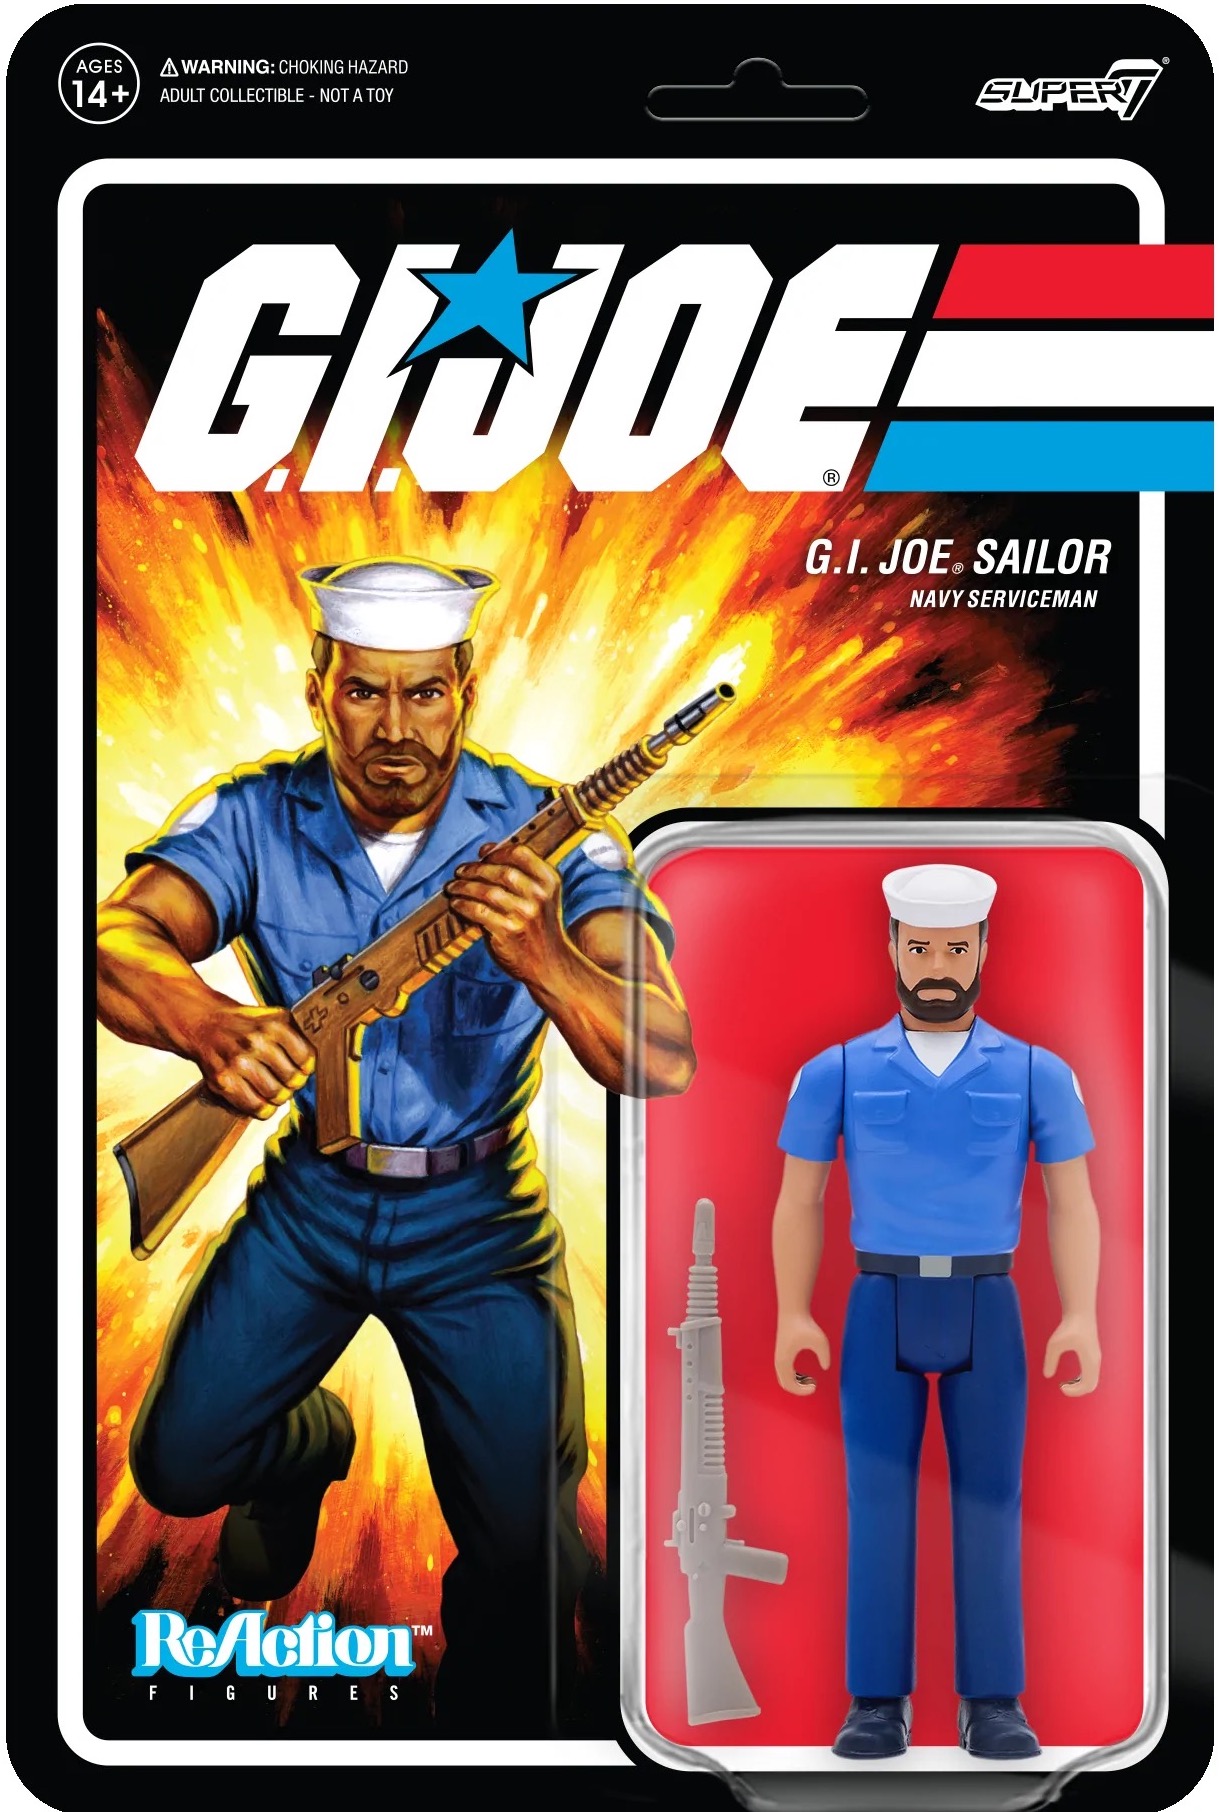 G.I.Joe - Super7 ReAction Figure - G.I.Joe Trooper tan skin version